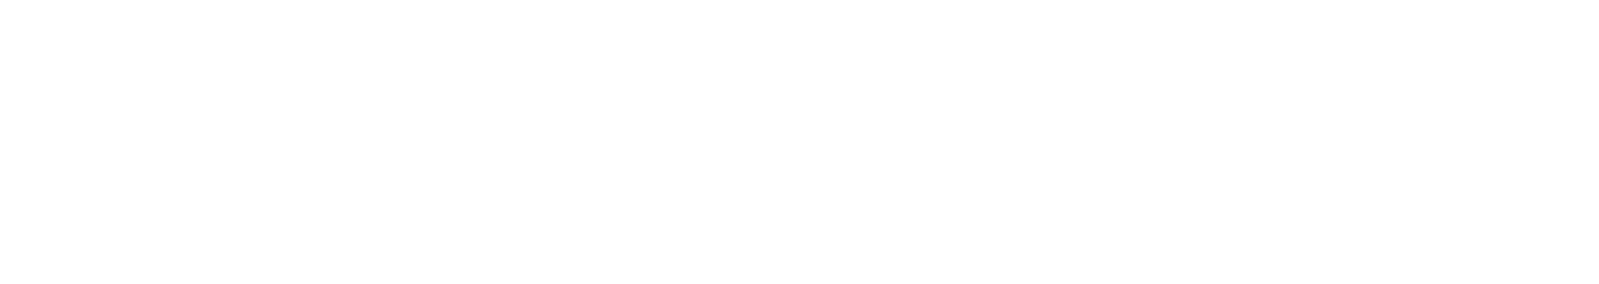 Kerry Logistics Network Logo groß für dunkle Hintergründe (transparentes PNG)